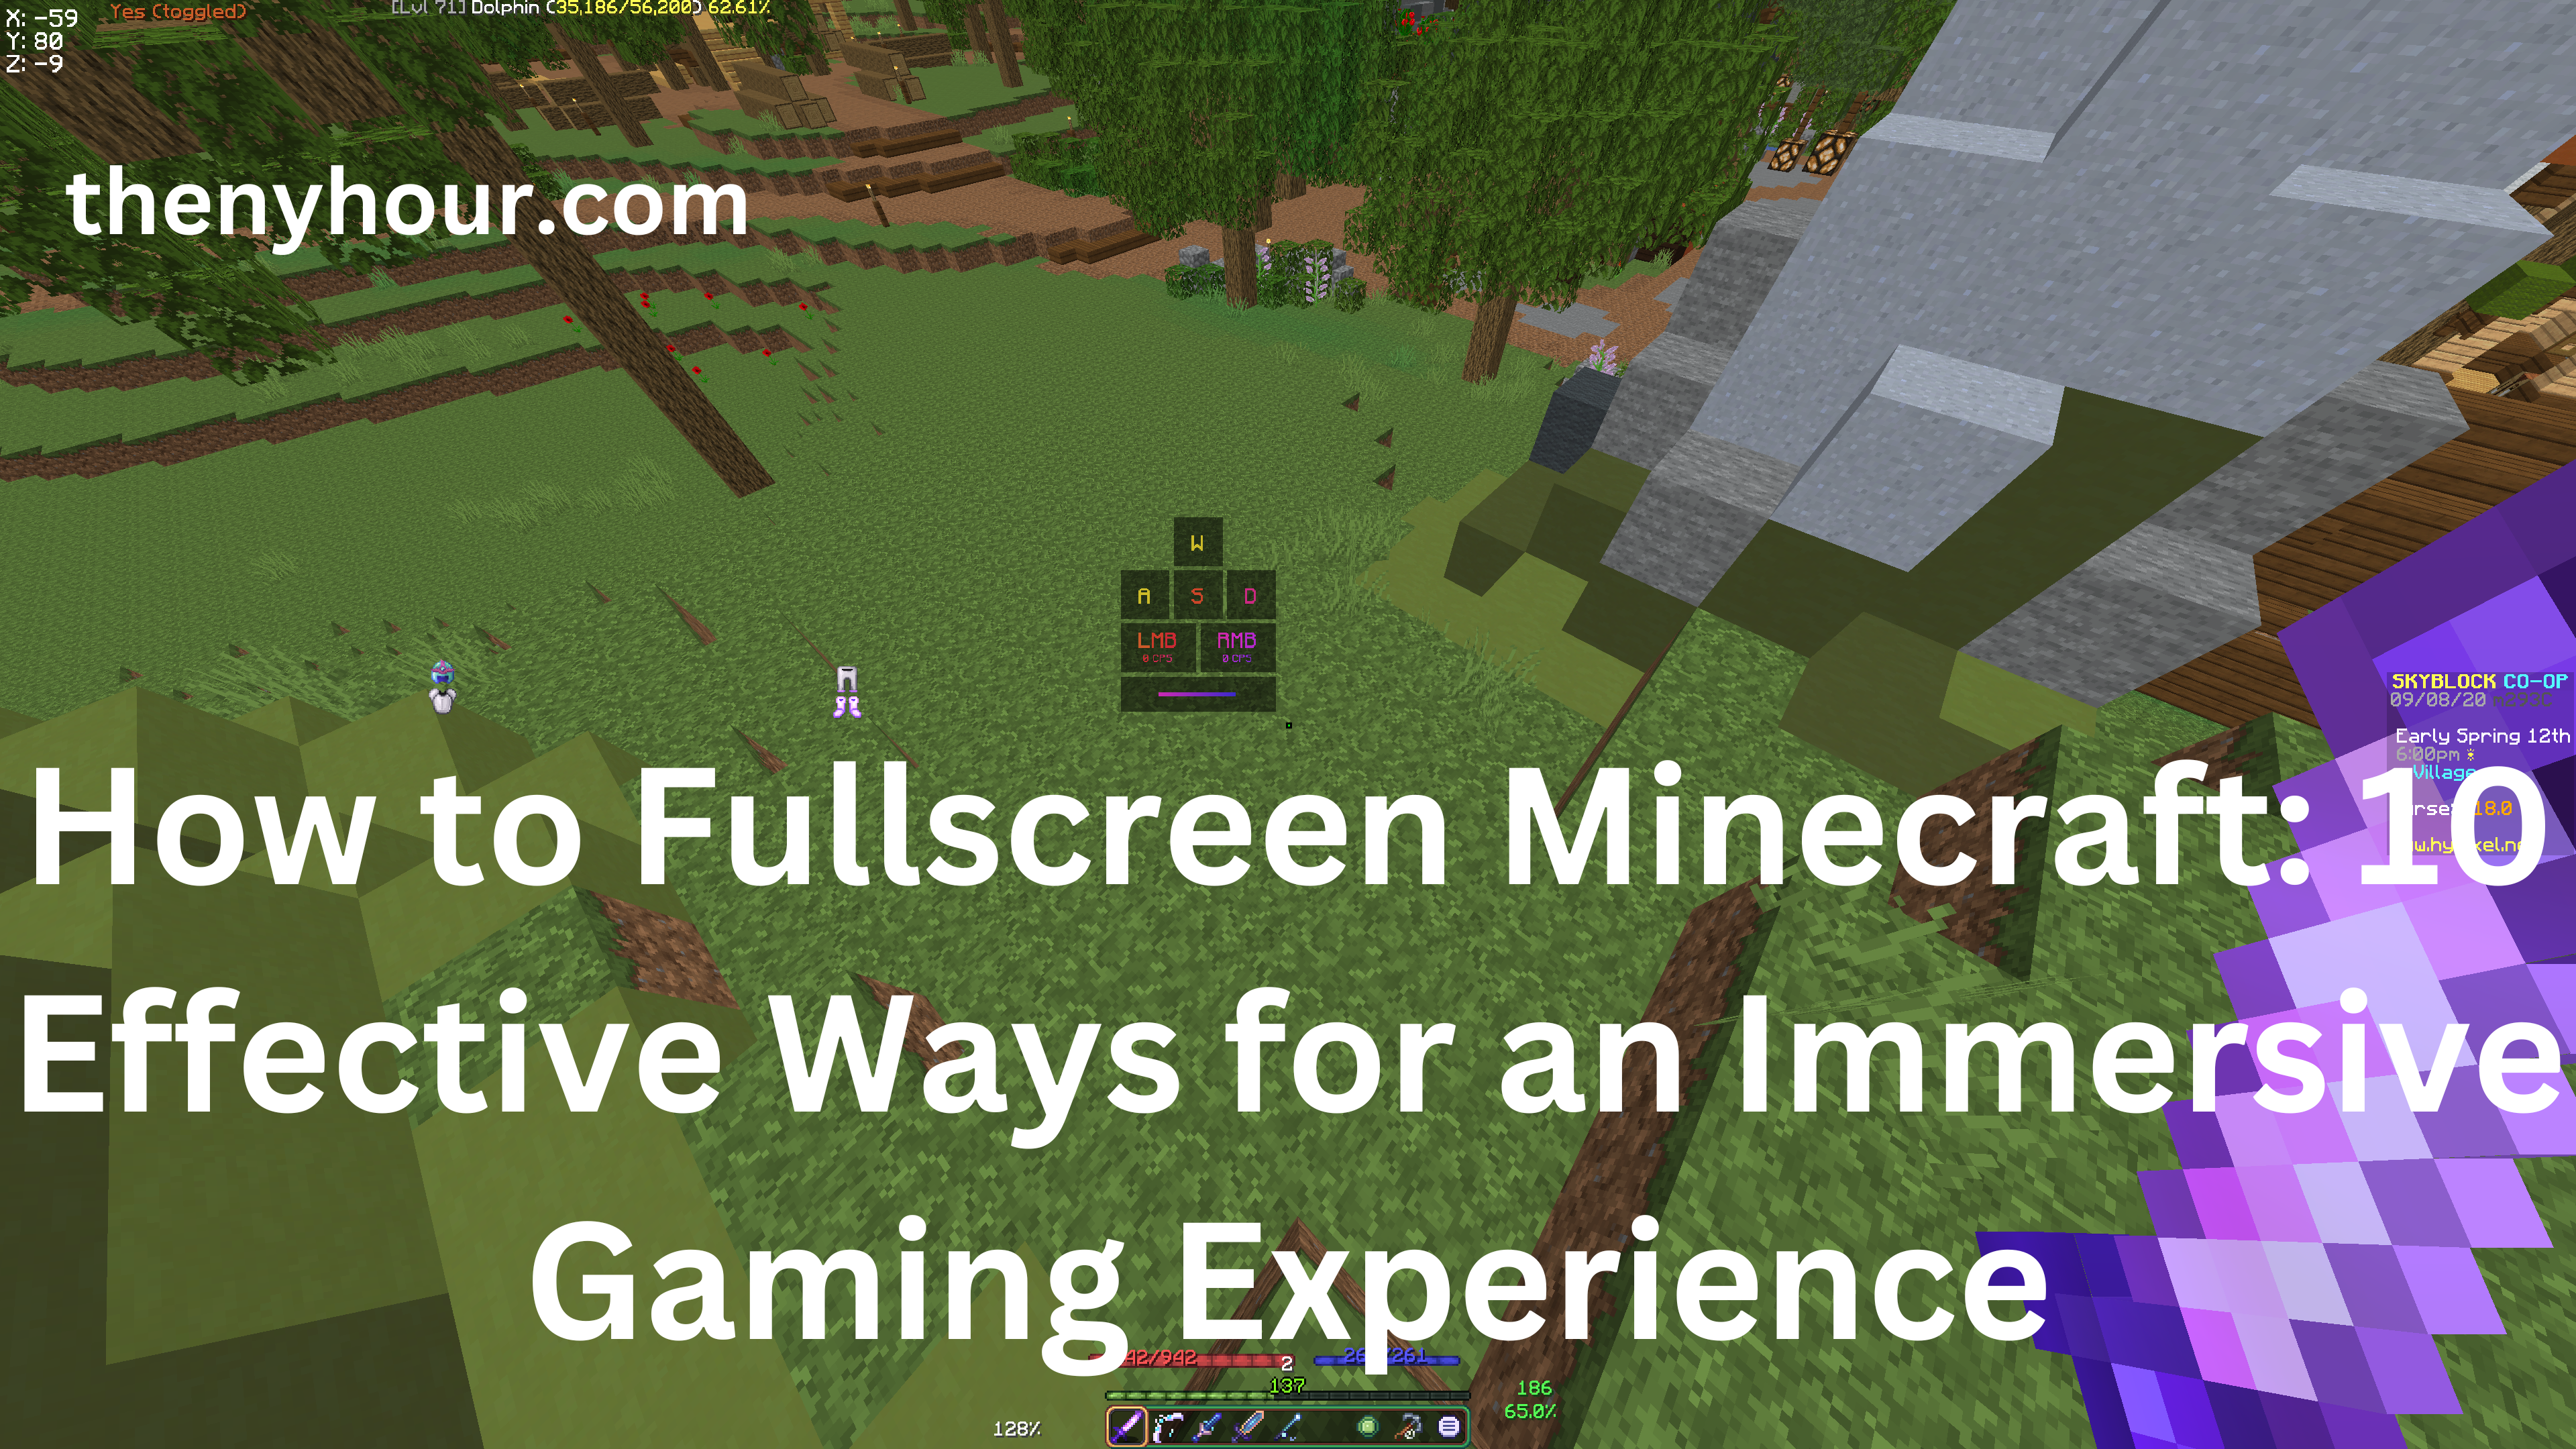 How to Fullscreen Minecraft